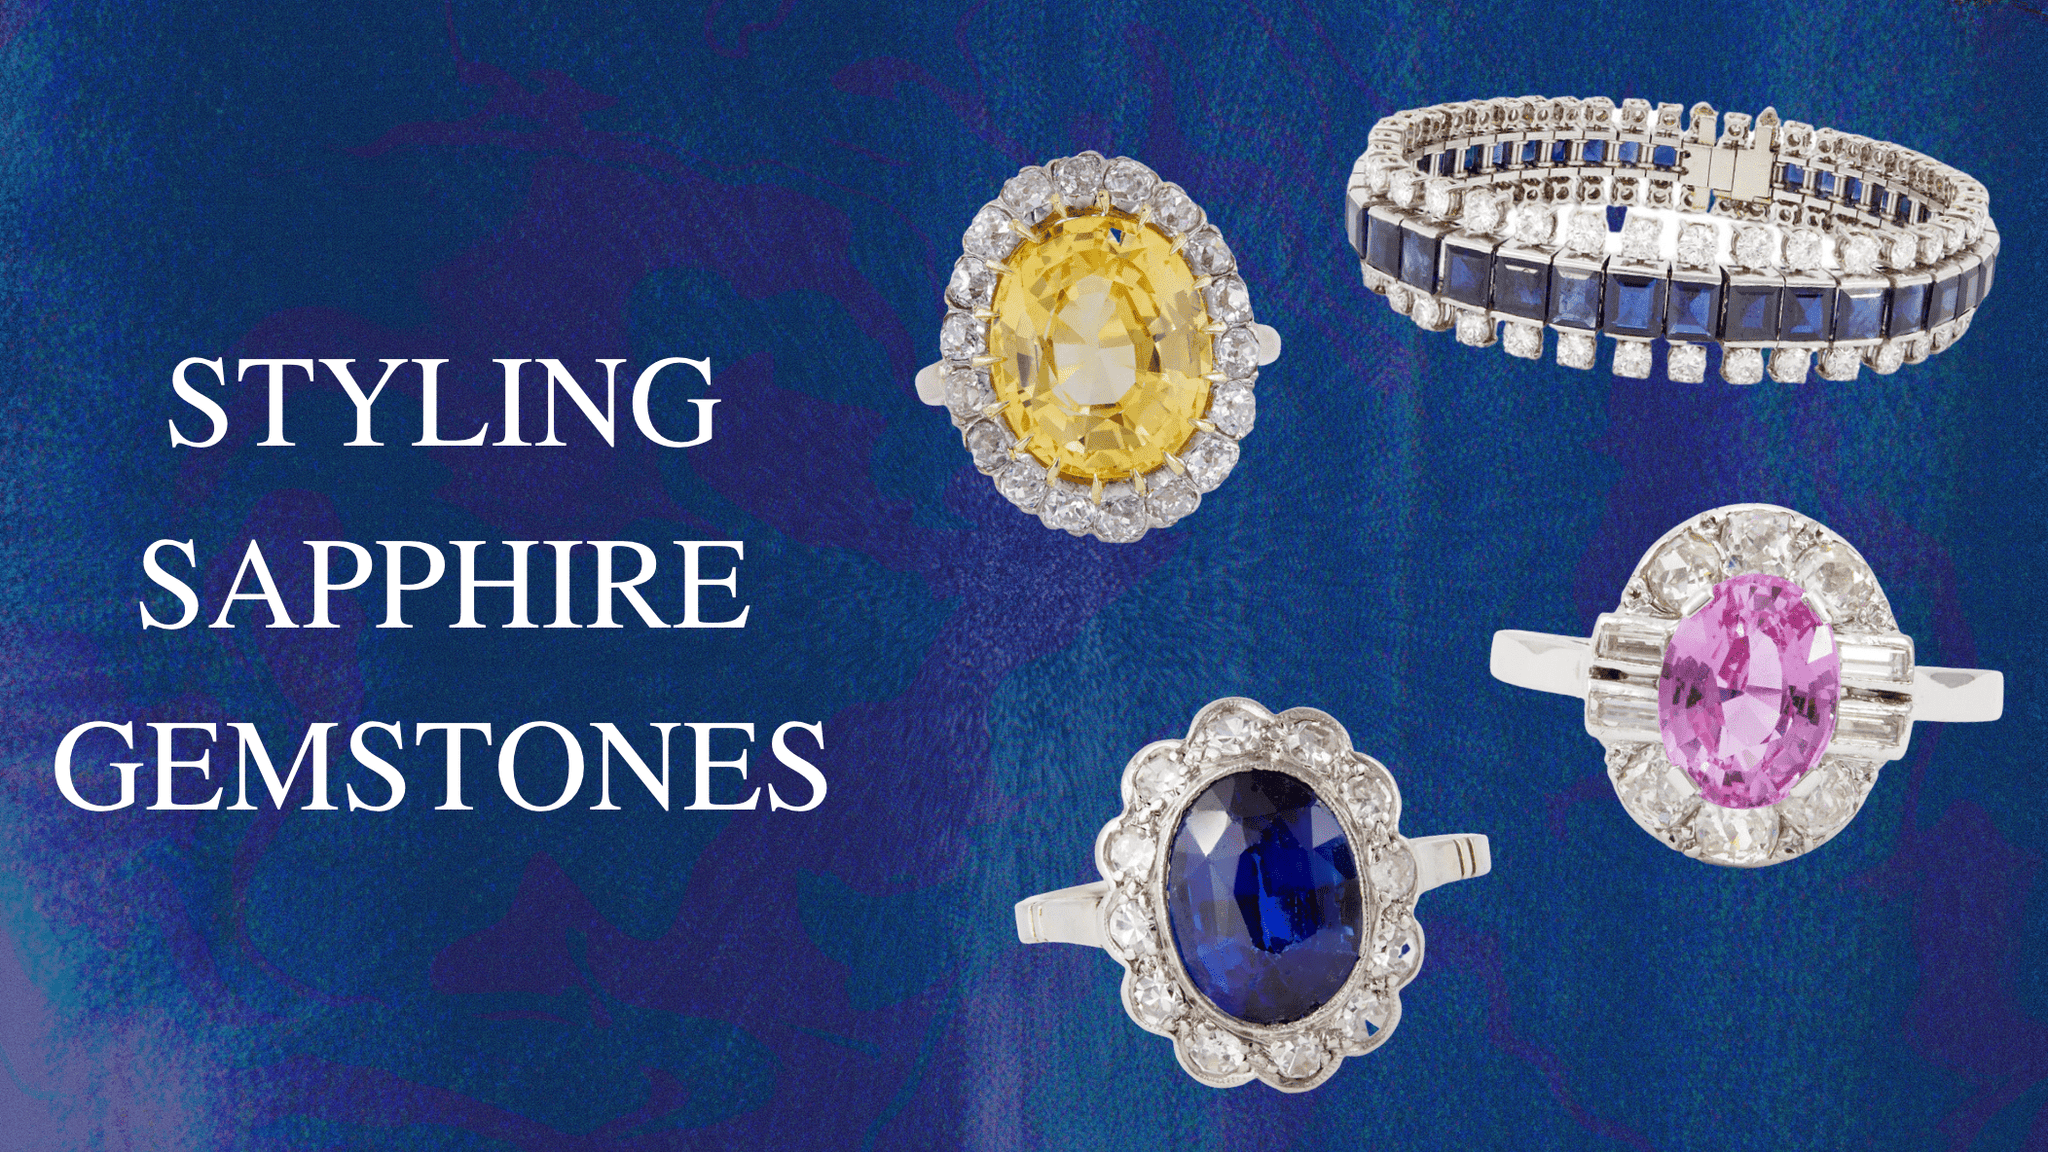 Styling Sapphire Gemstones - Jack Weir & Sons